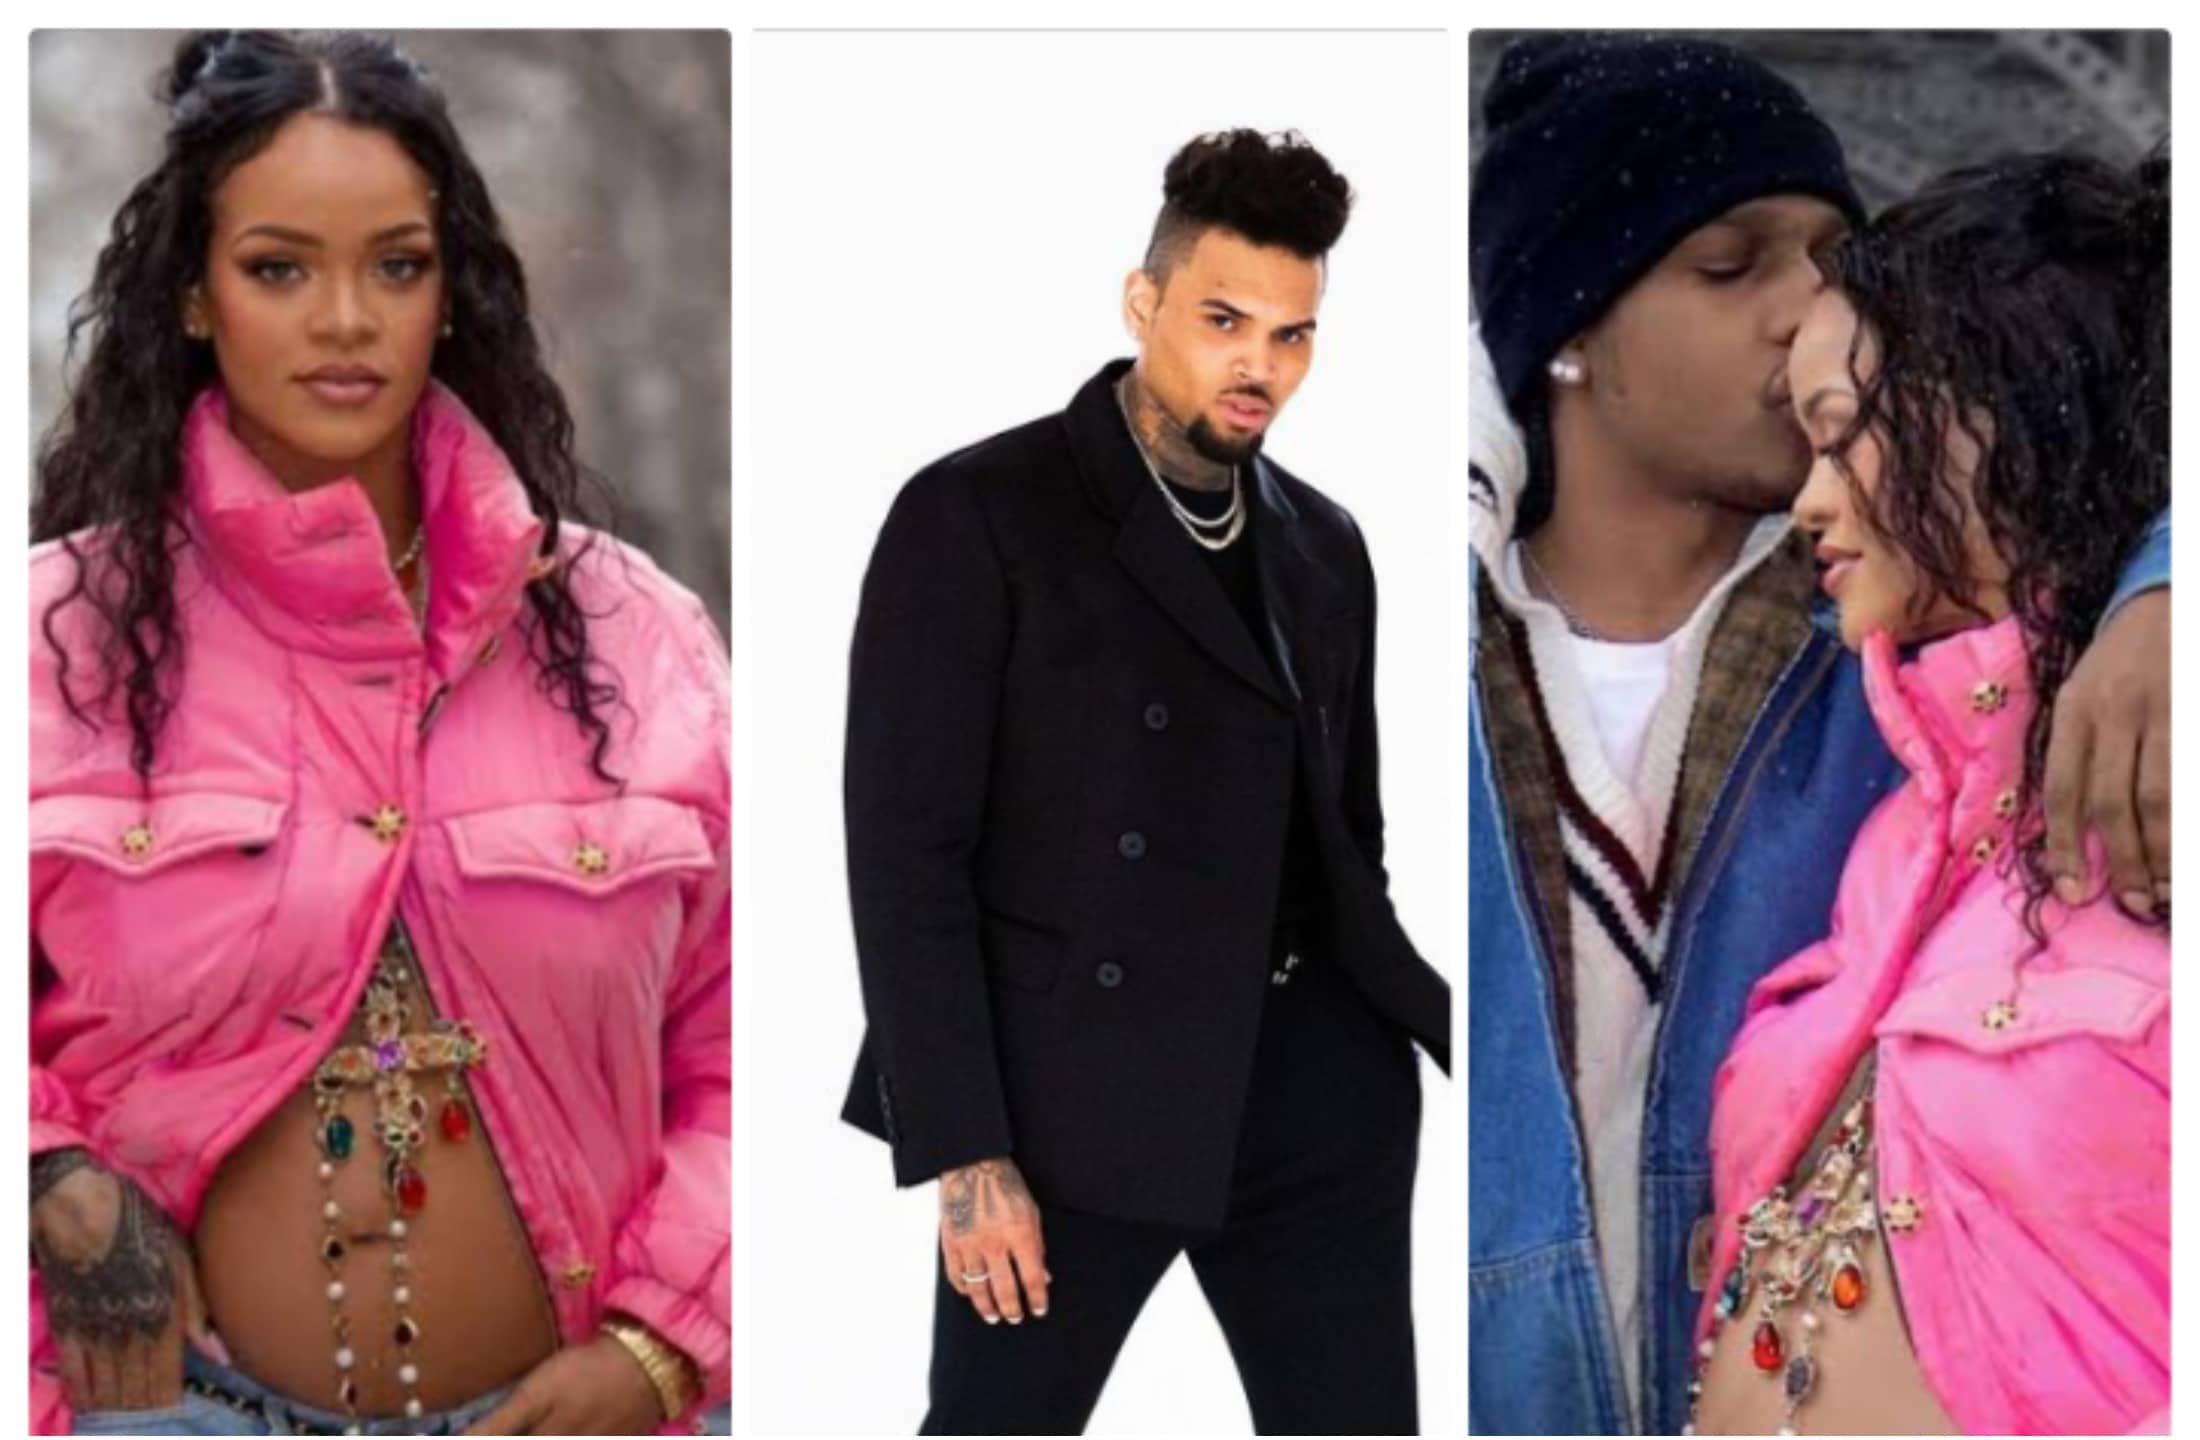 Chris Brown congratulates Rihanna